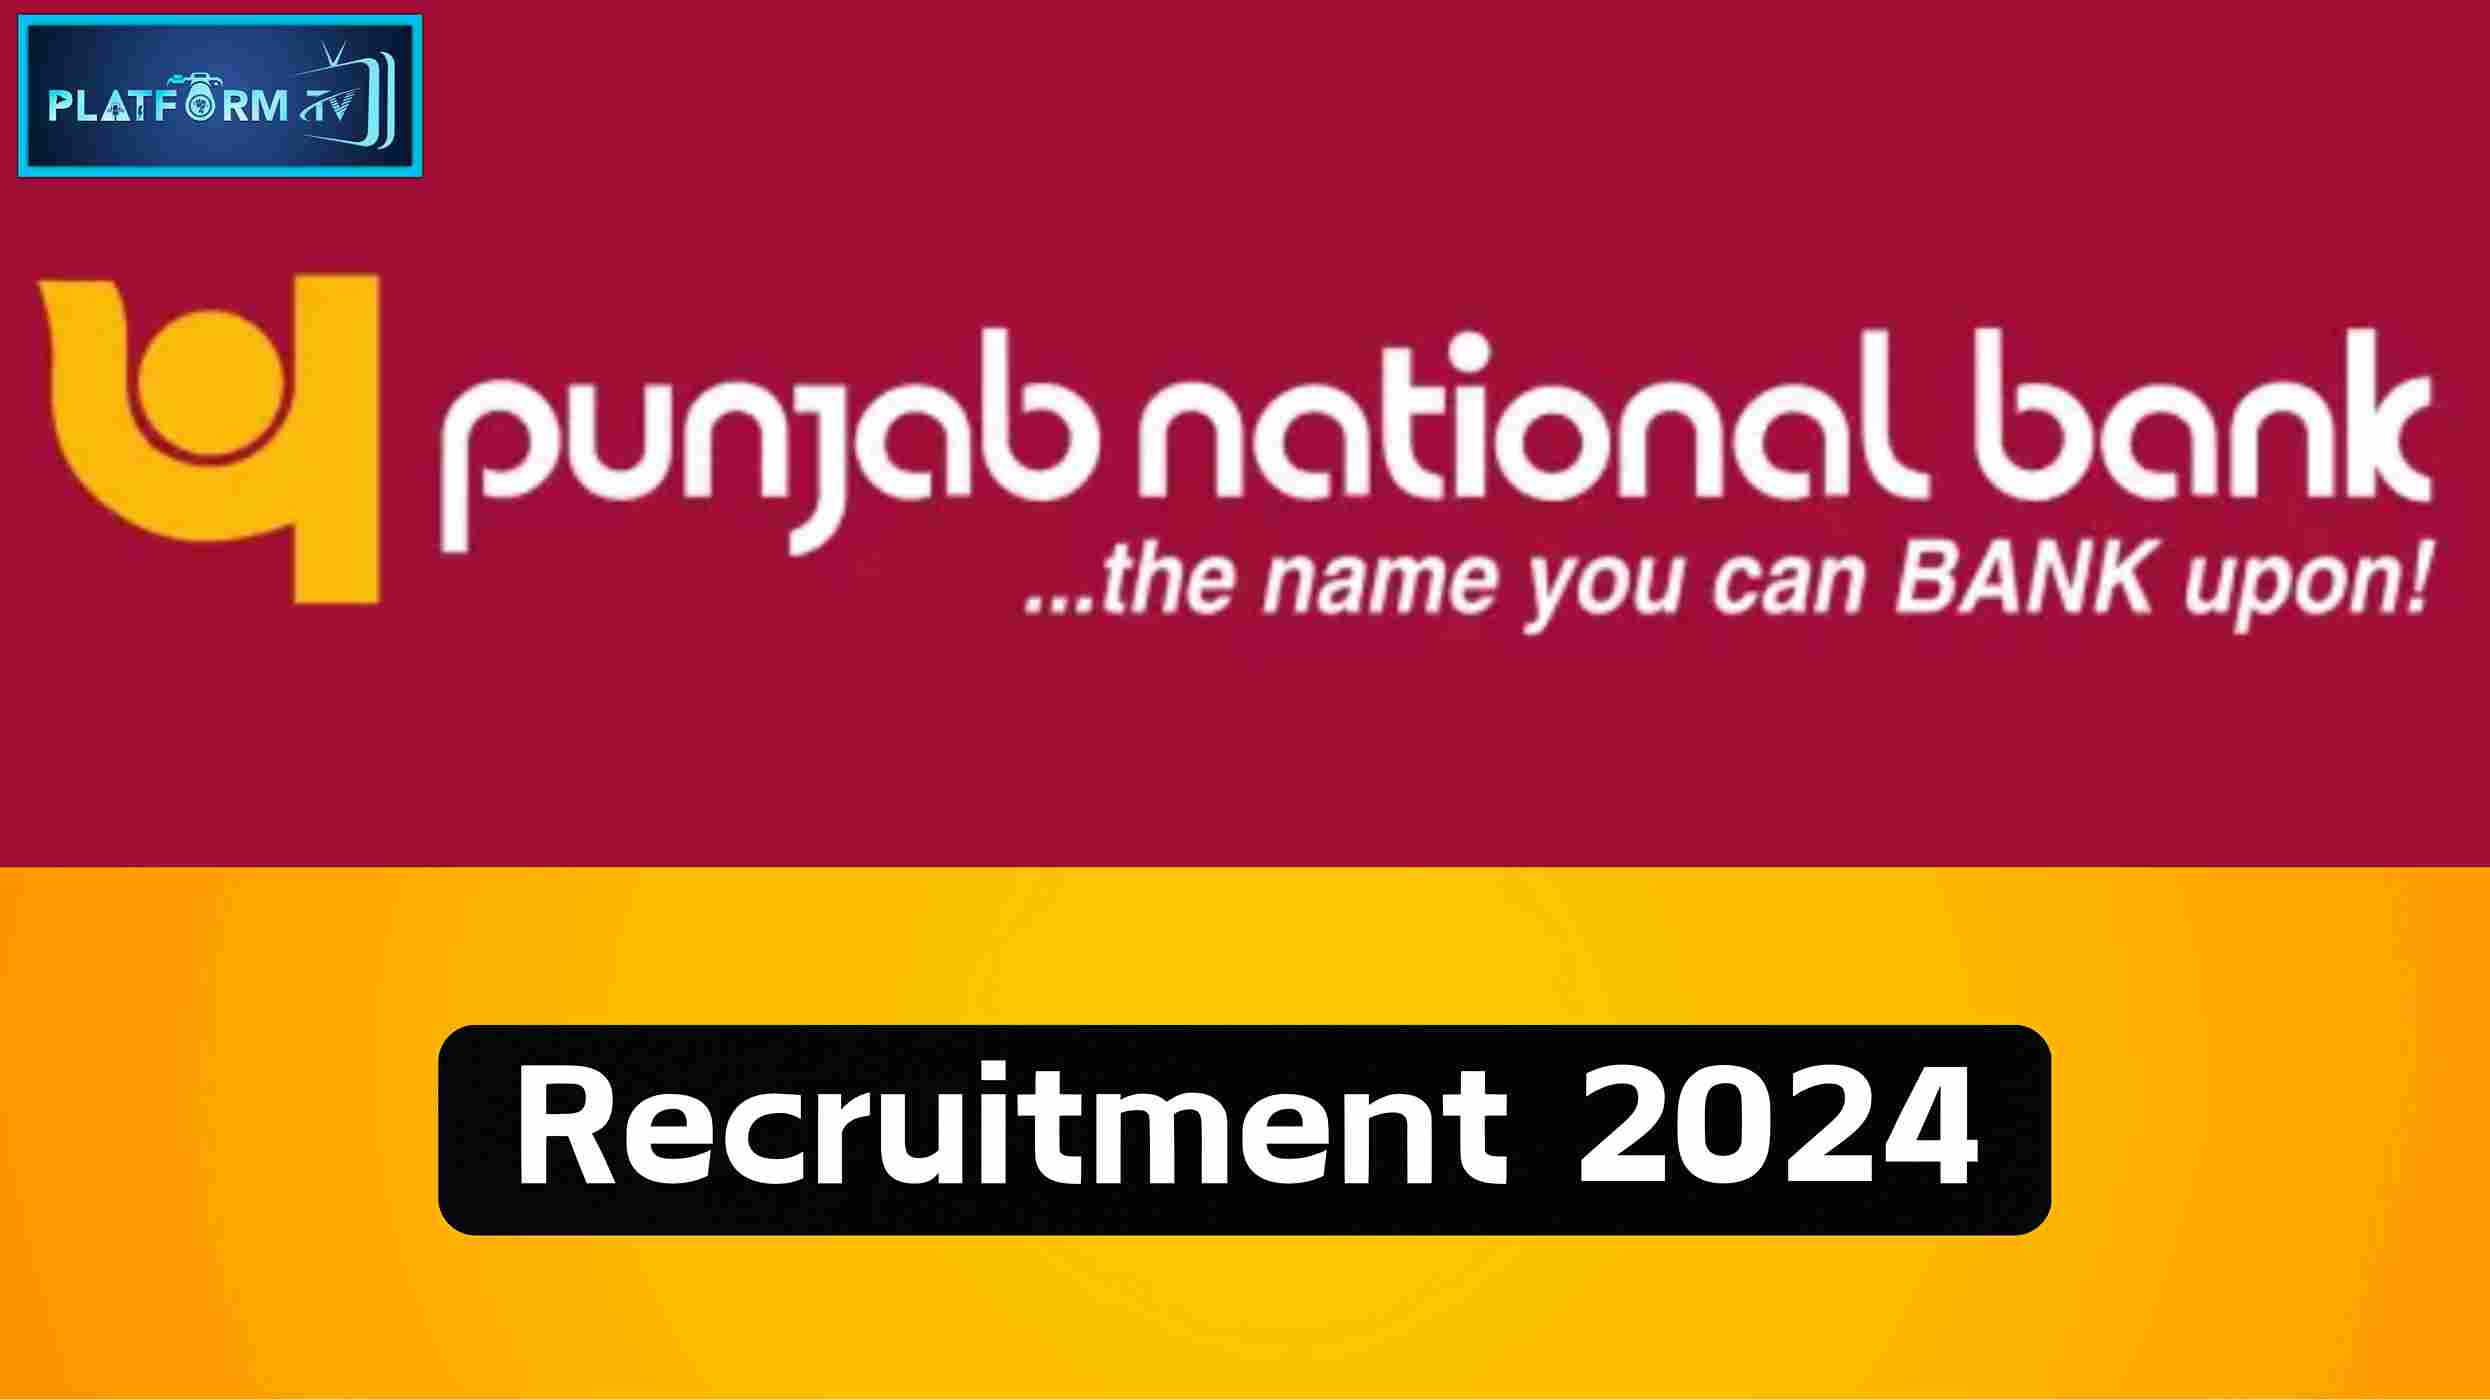 PNB Recruitment 2024 - Platform Tamil